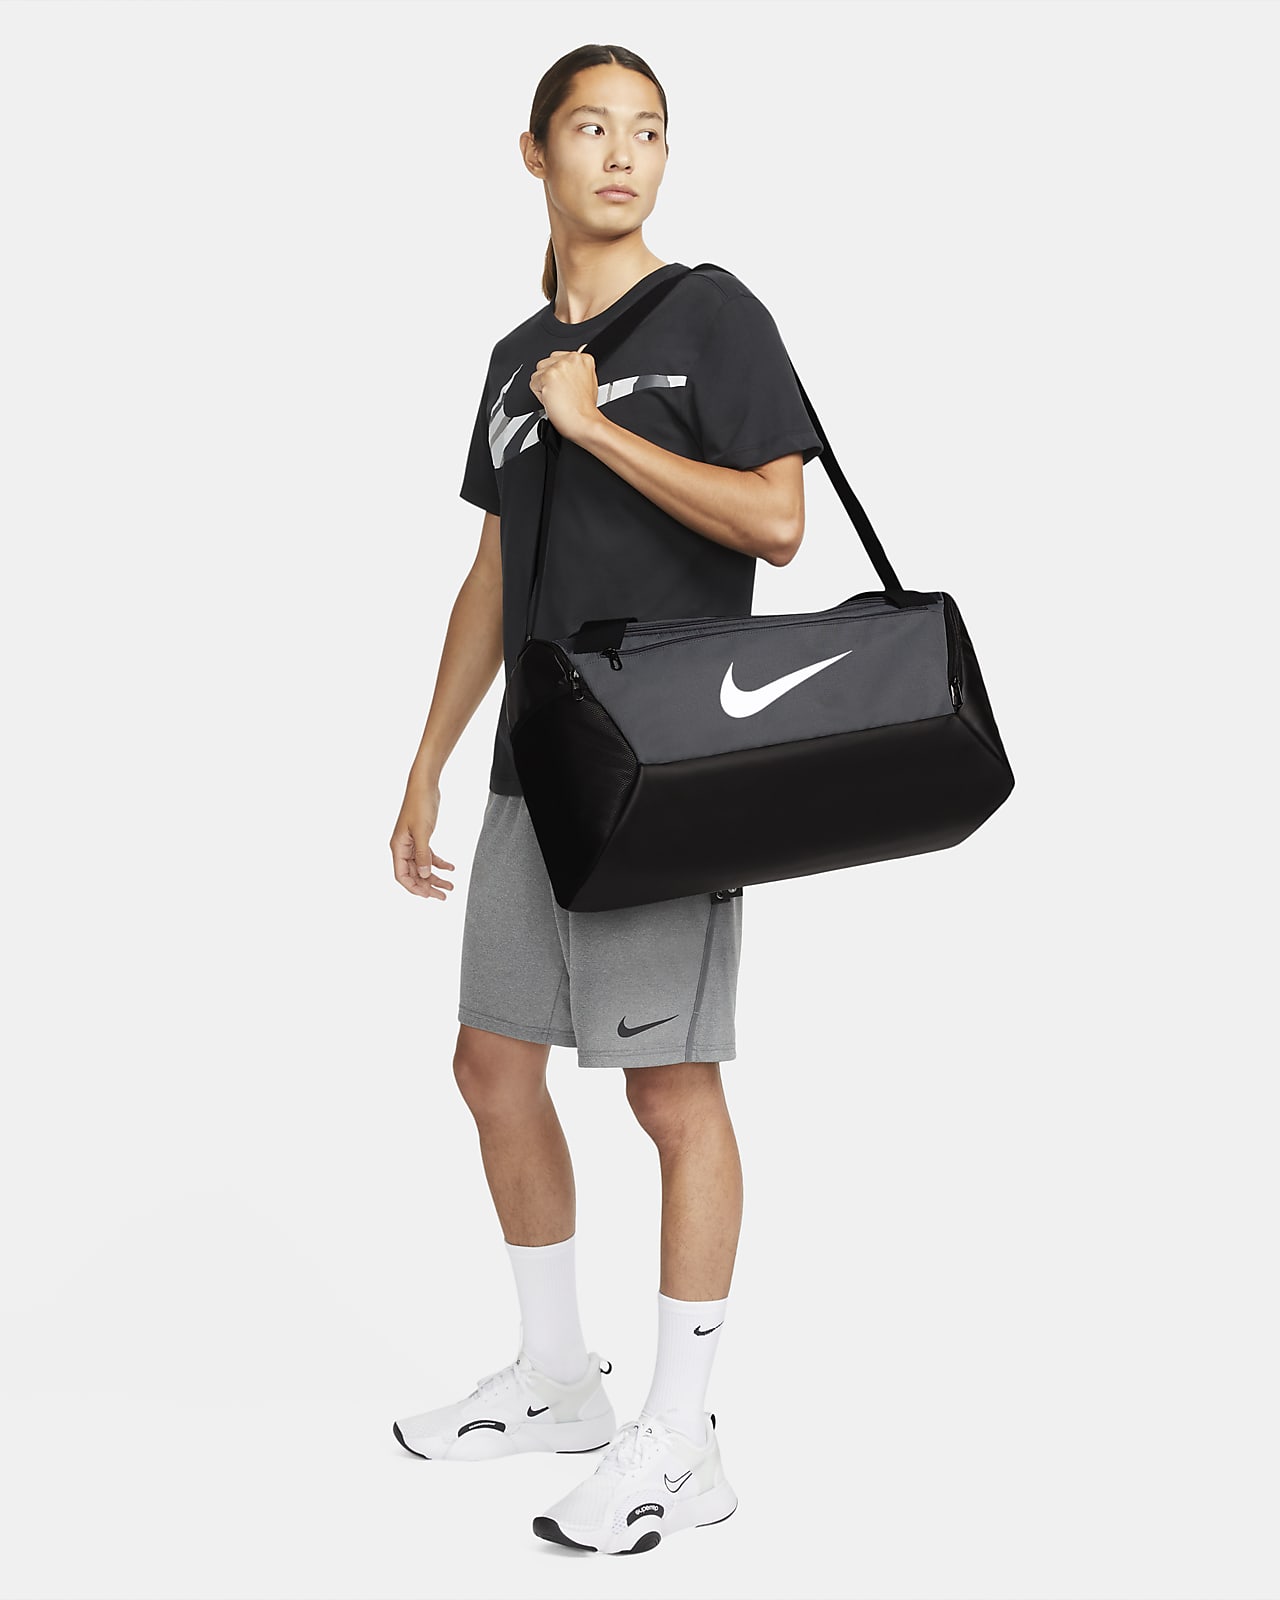 Nike Brasilia Small Duffel-9.0, Black/Black/White, One Size